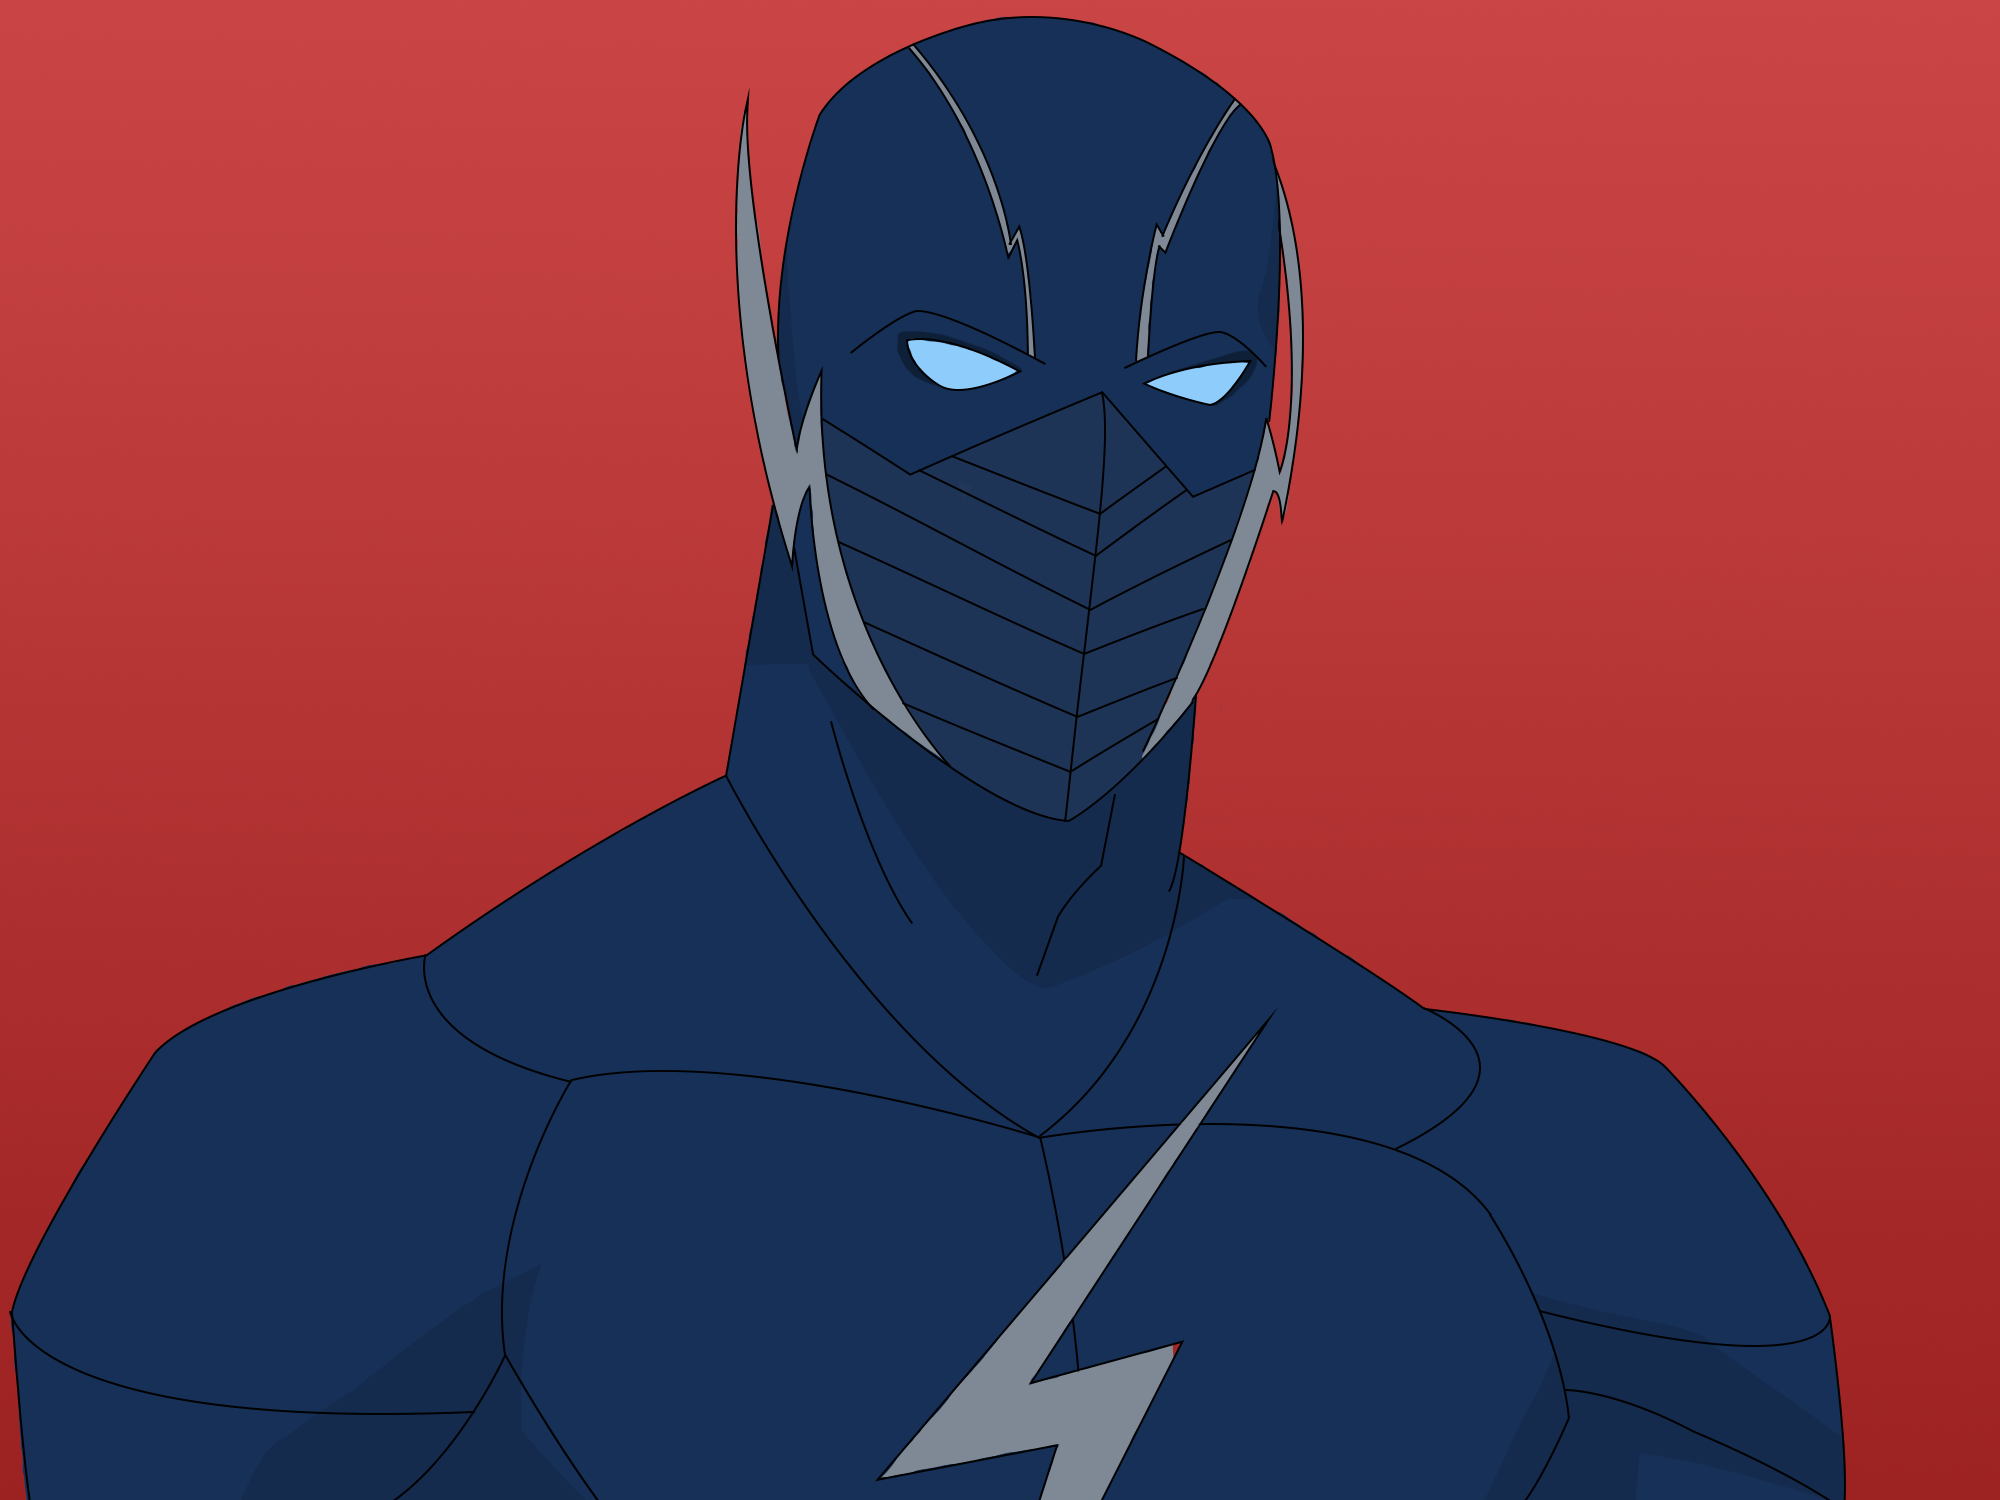 Cw Savitar by bigoso91  Superhero design, Flash comics, Flash characters